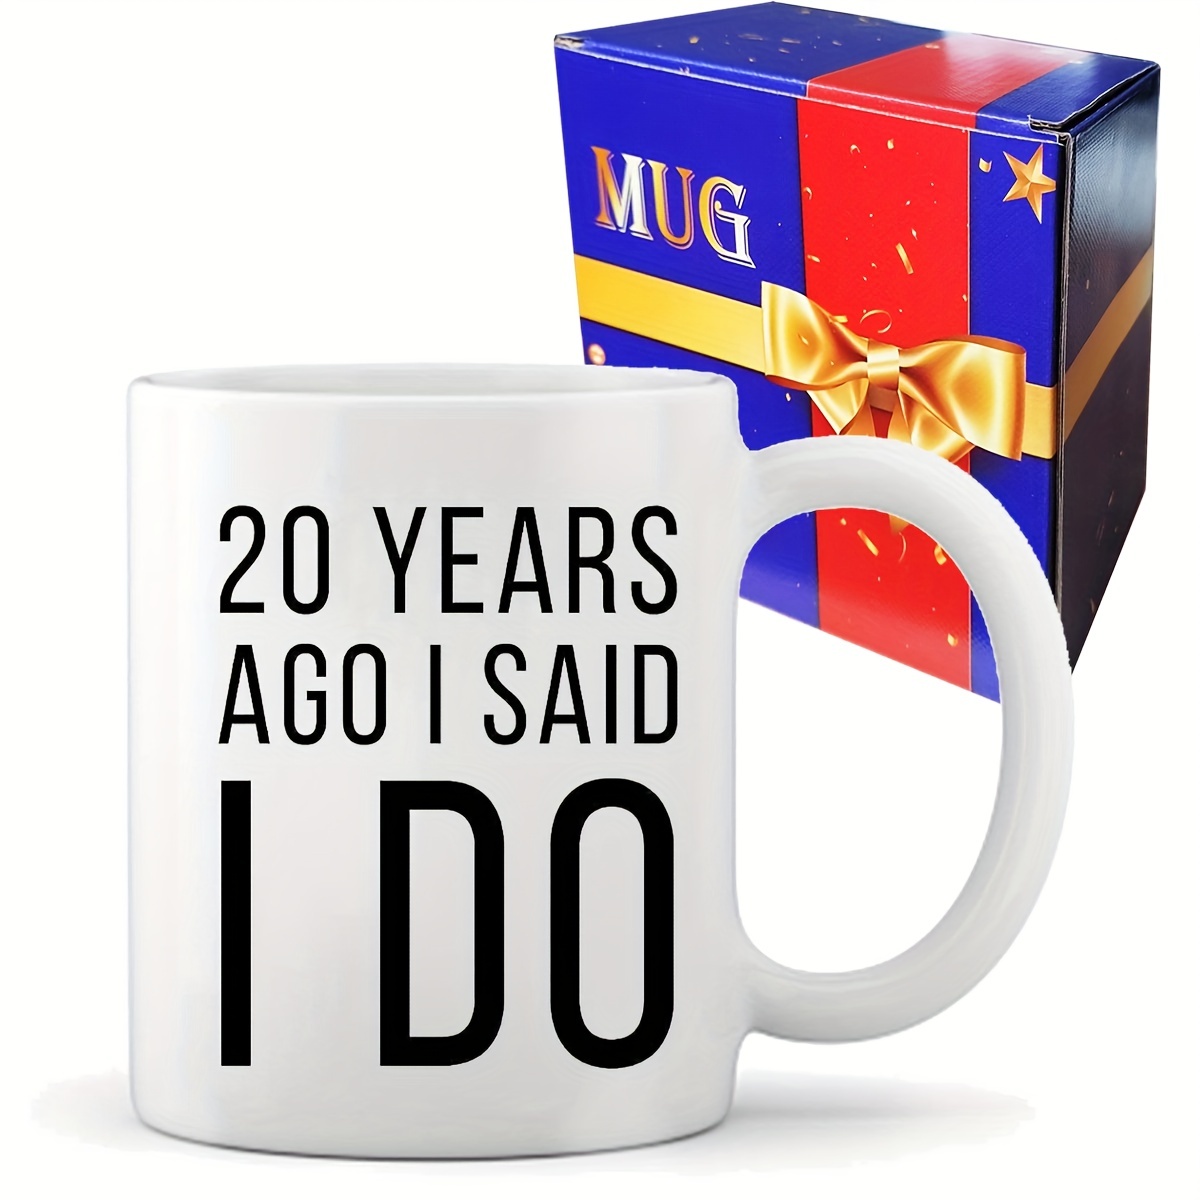 Happy Anniversary Coffee Giftbox